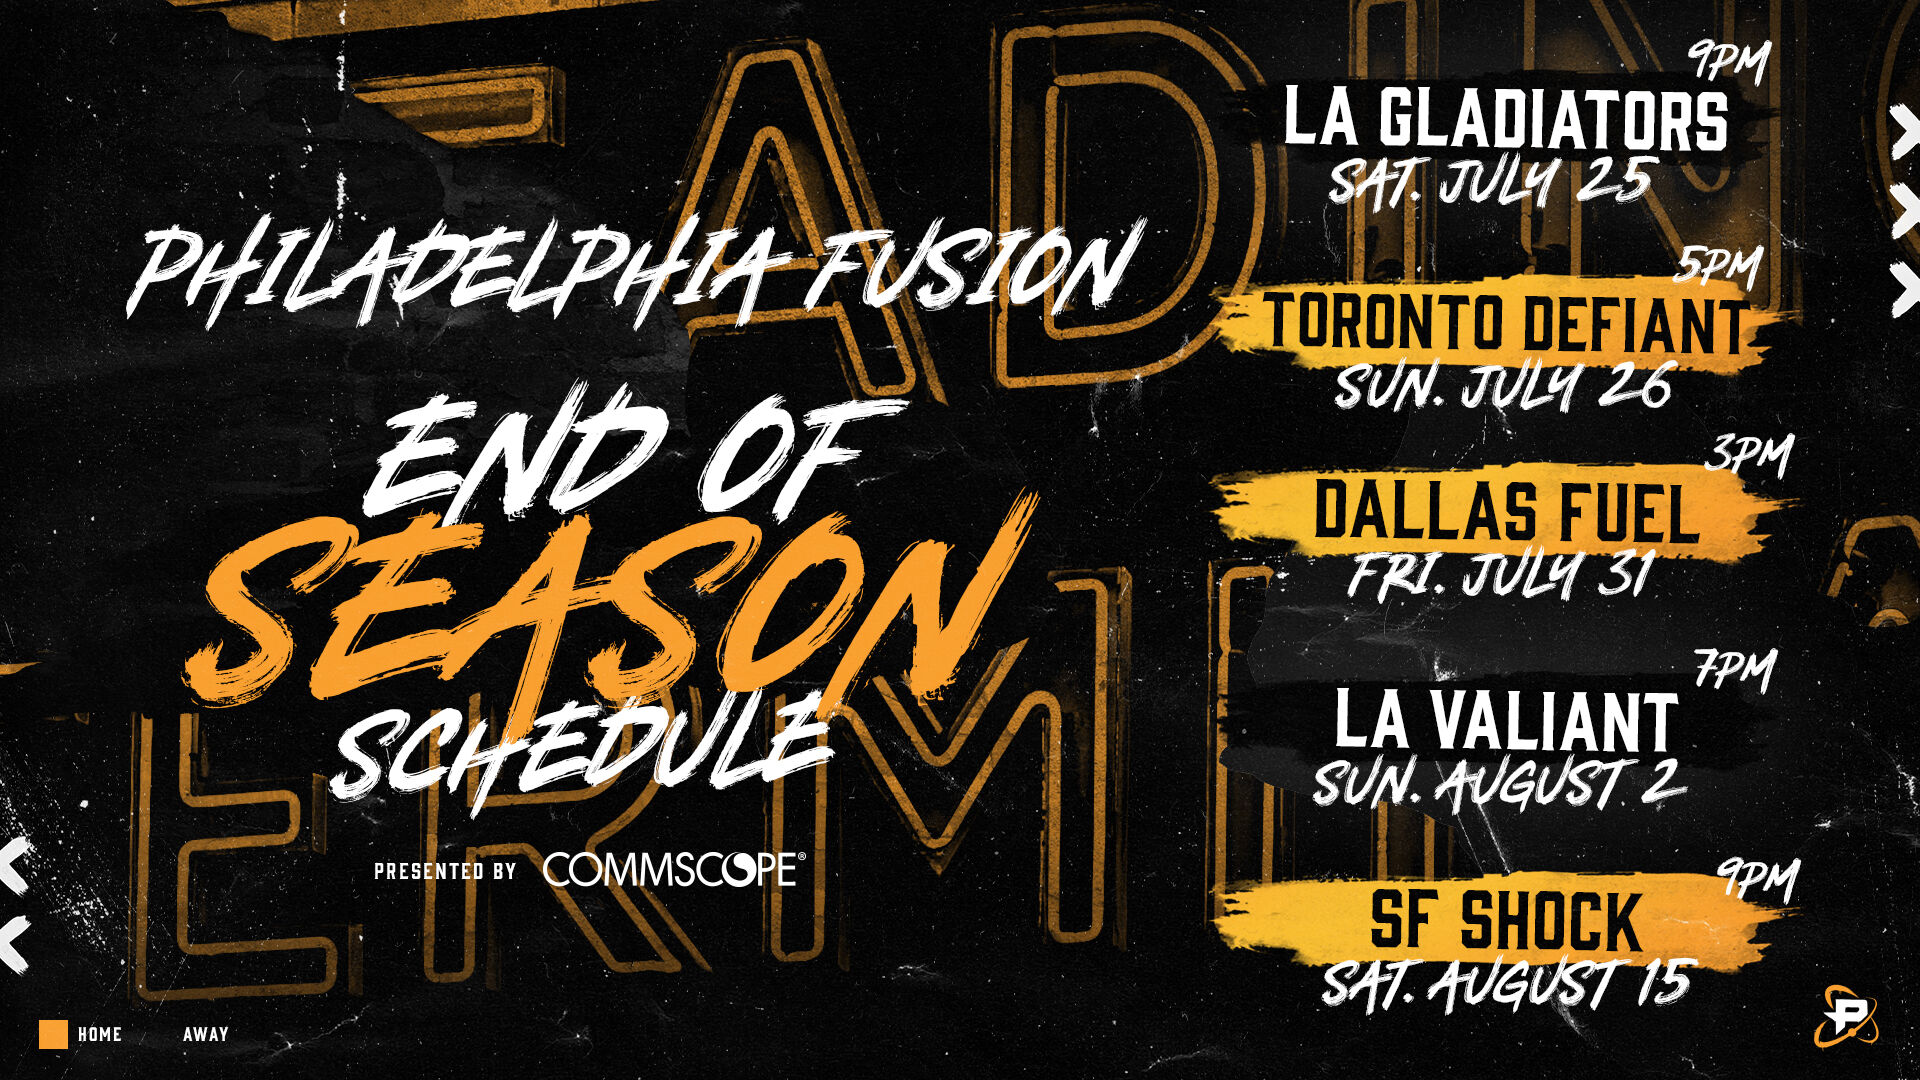 Philadelphia Fusion Endo of Season 2020 Schedule